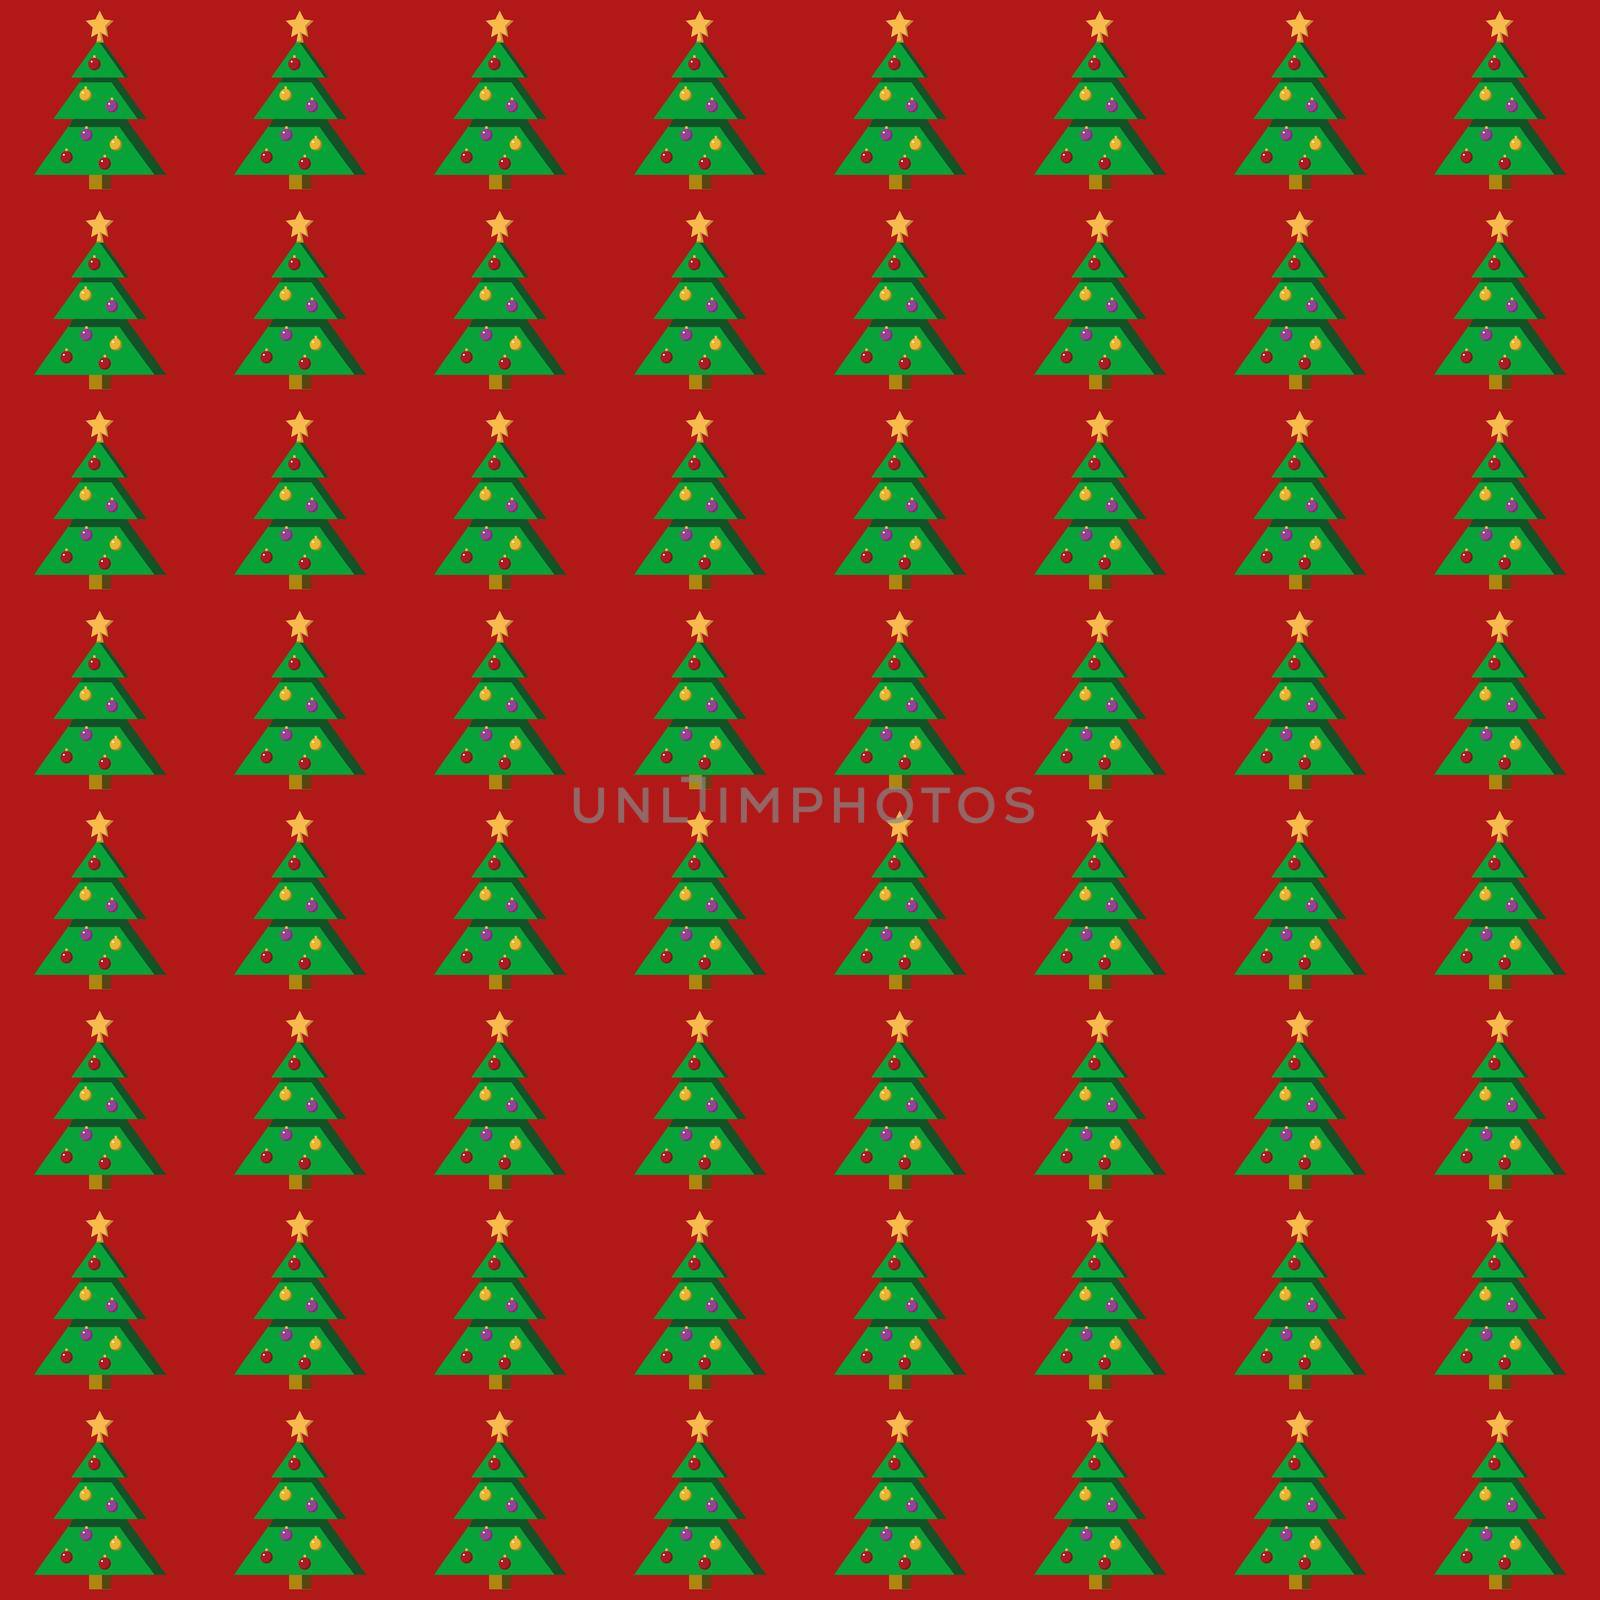 Flat Christmas tree seamless pattern by Alxyzt